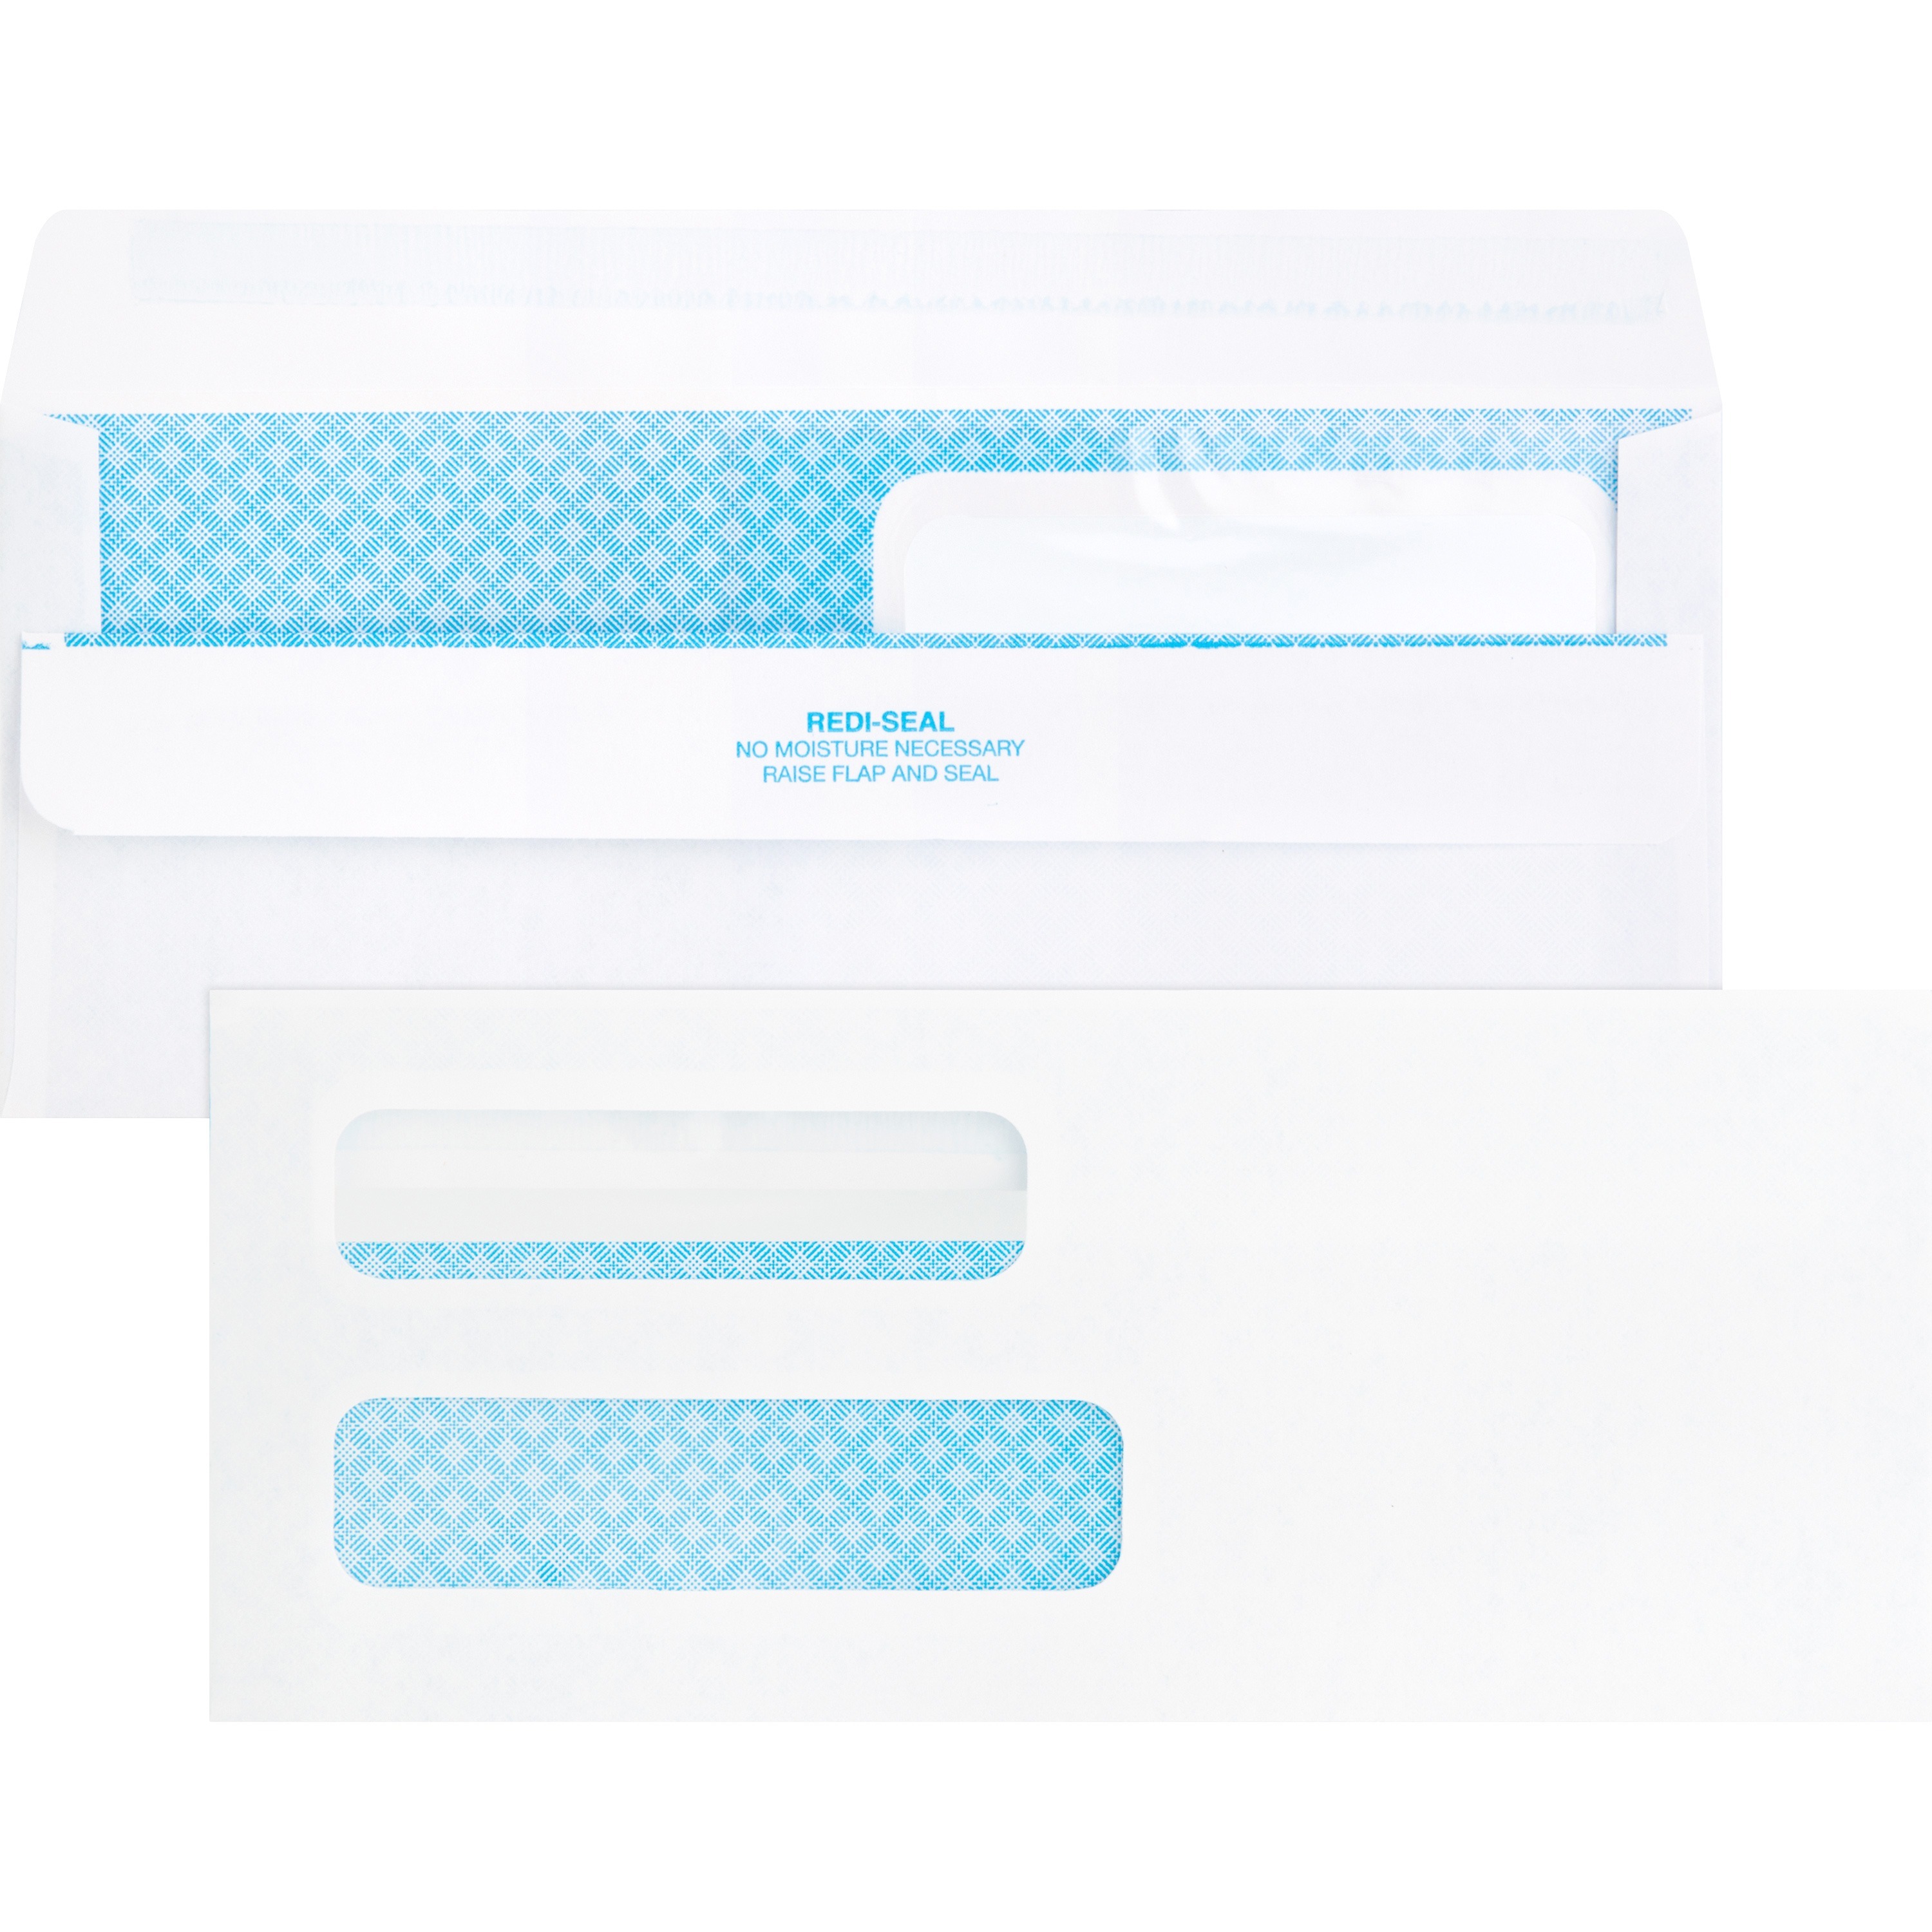 custom check envelopes